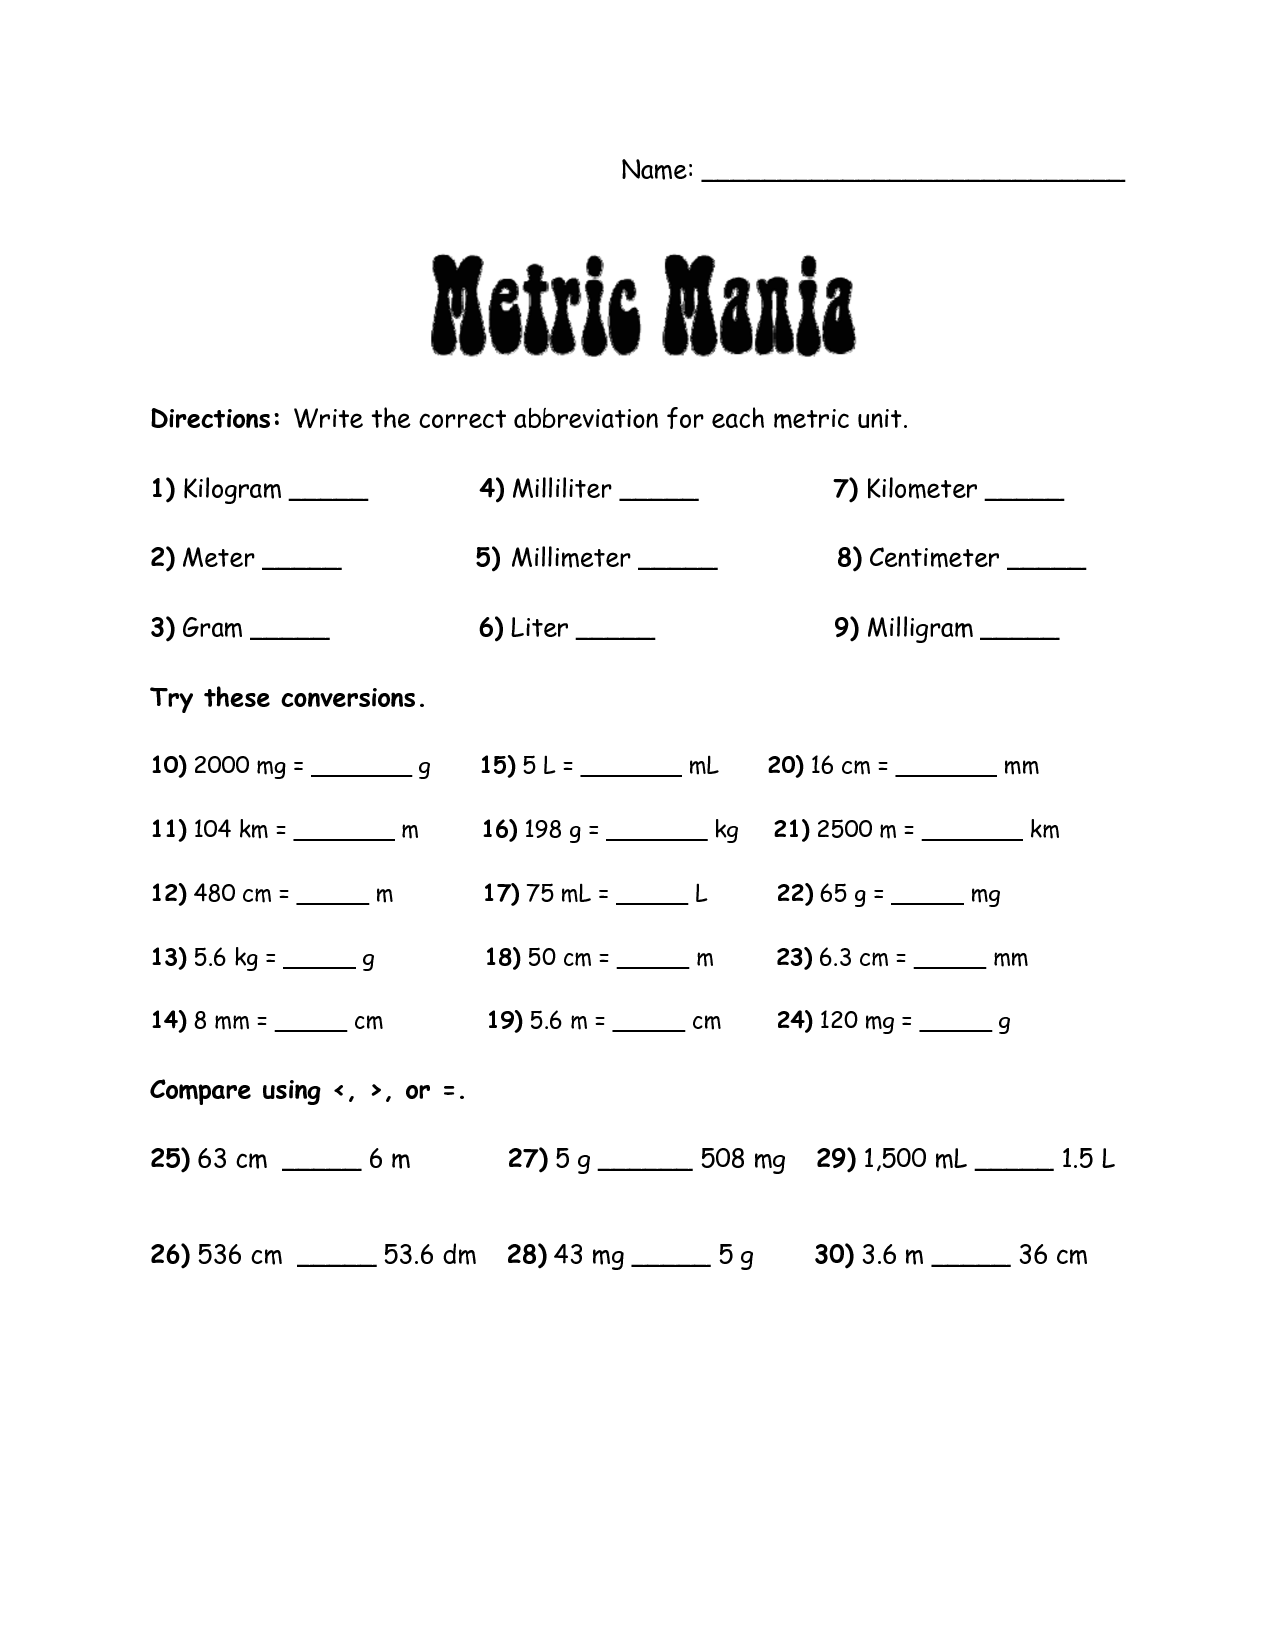 Metric Mania Conversion Worksheet